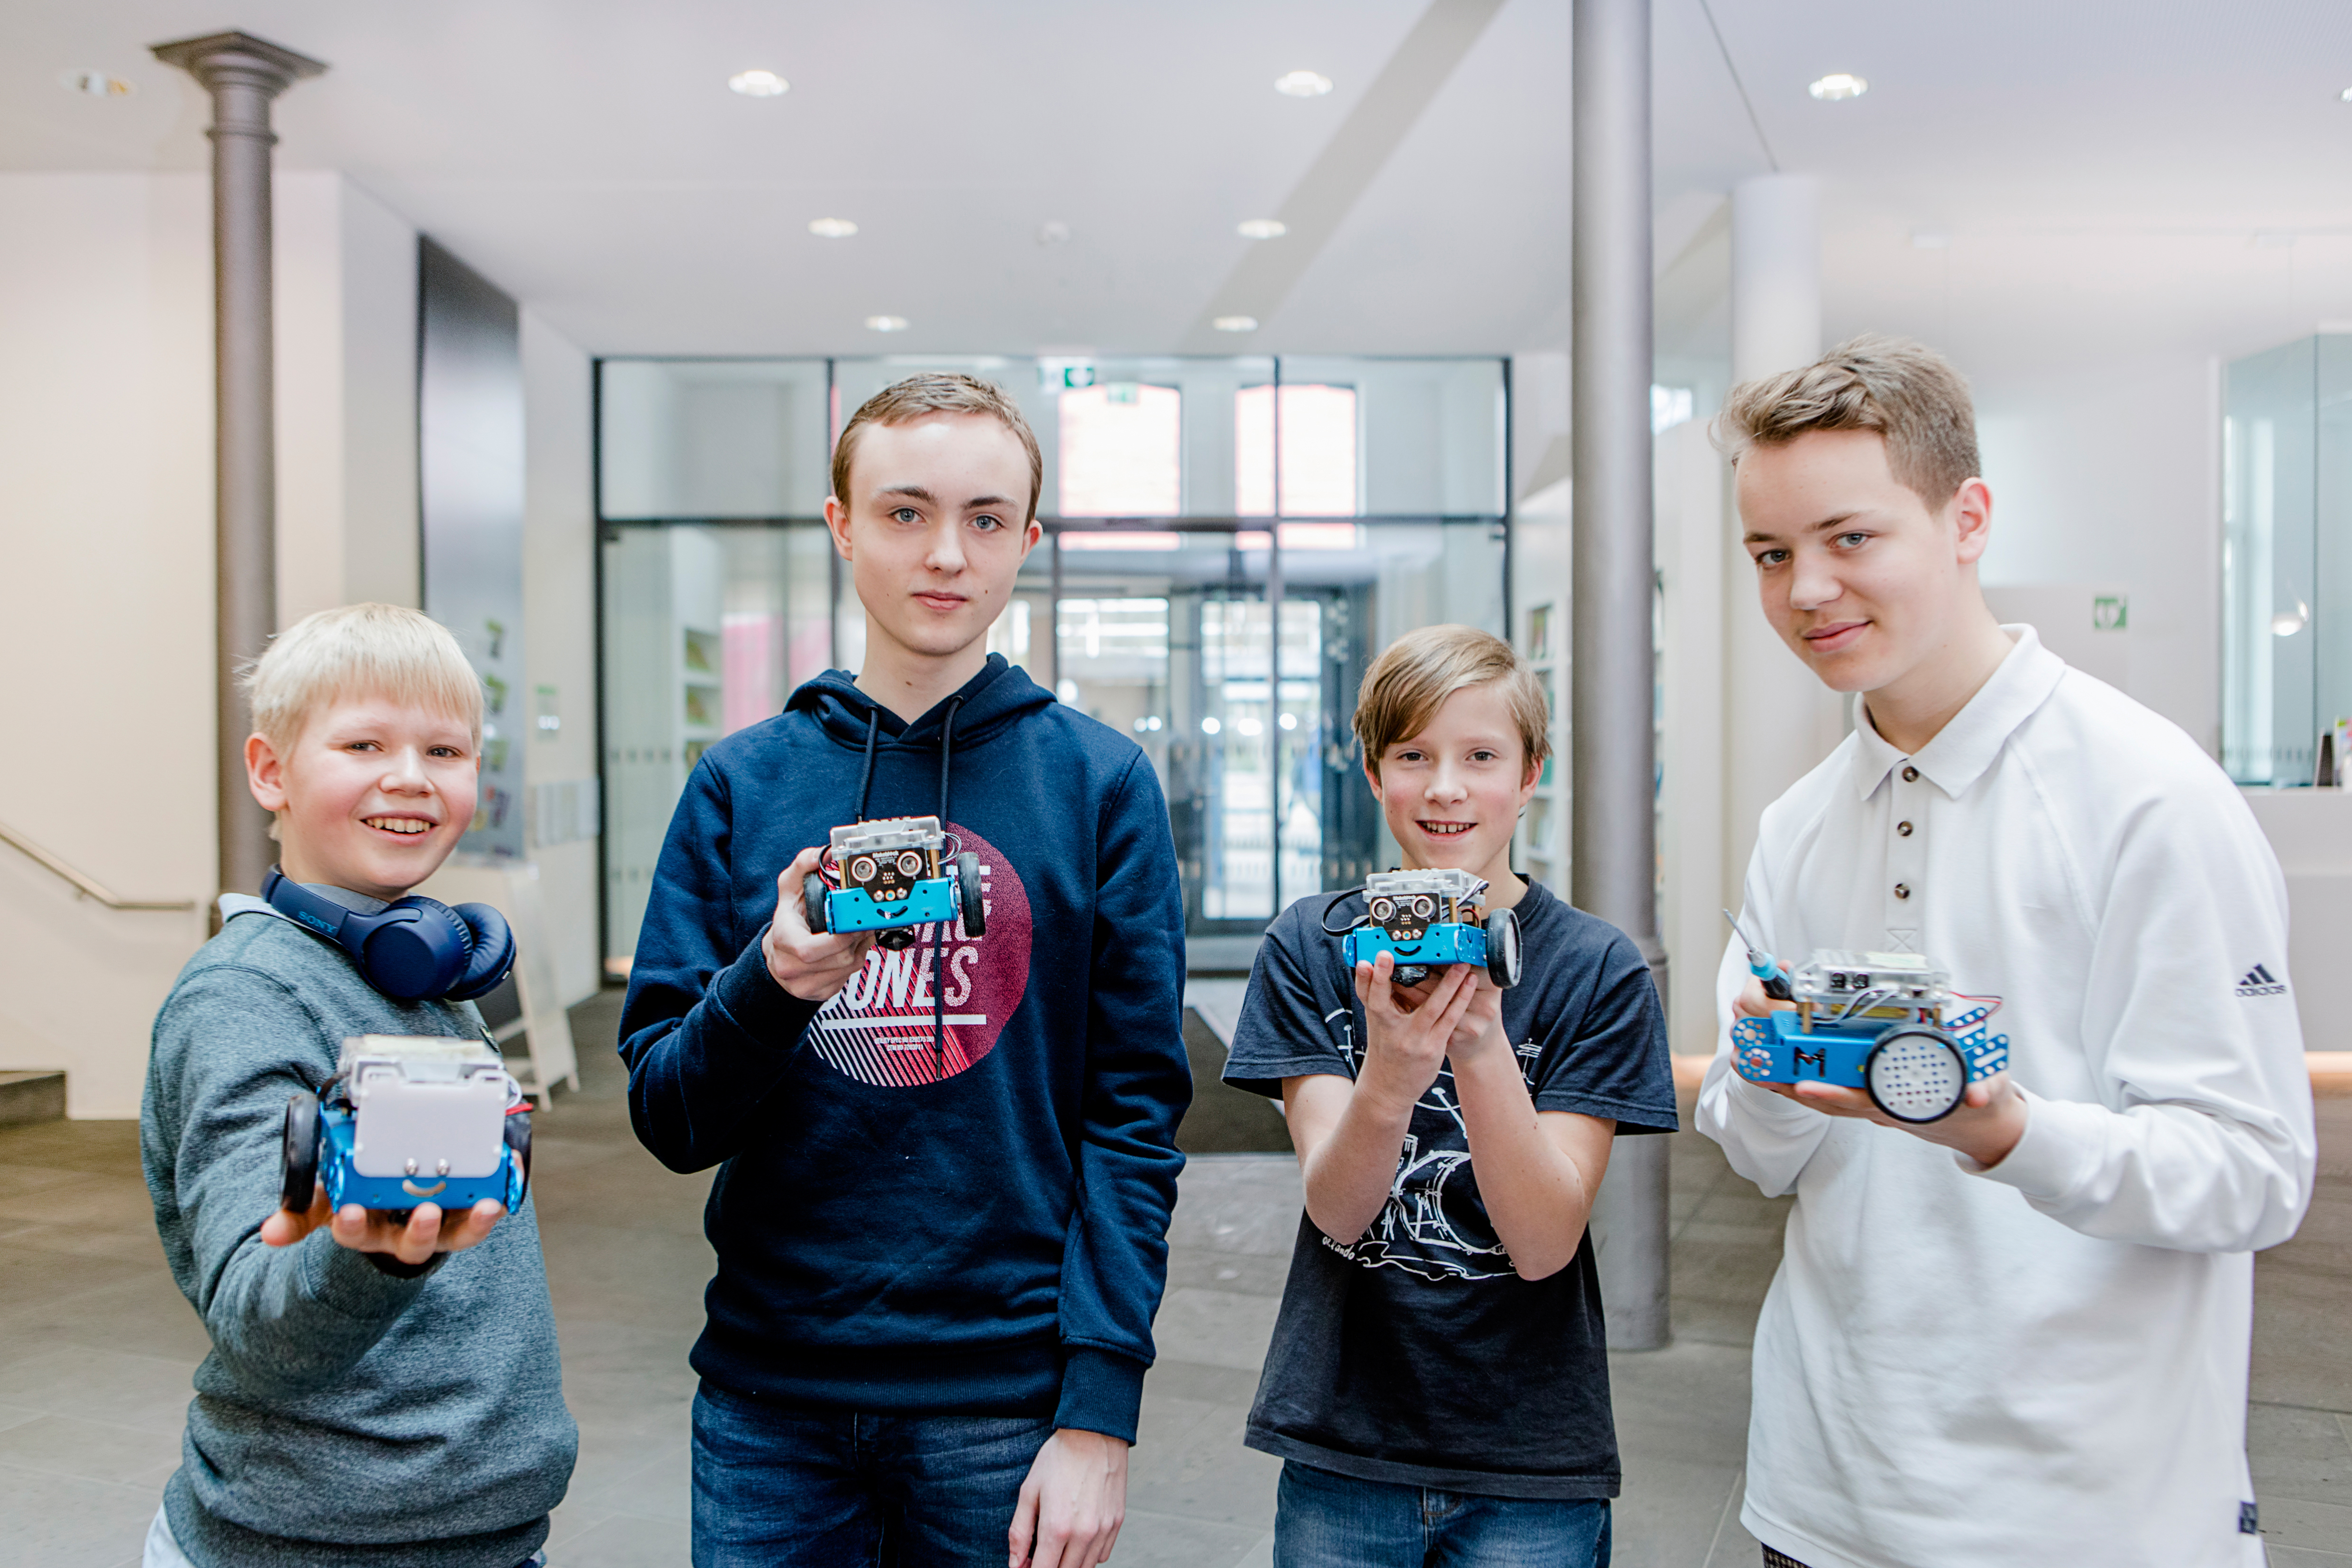 Foto: Vier Jungs halten ihre gebauten Roboter